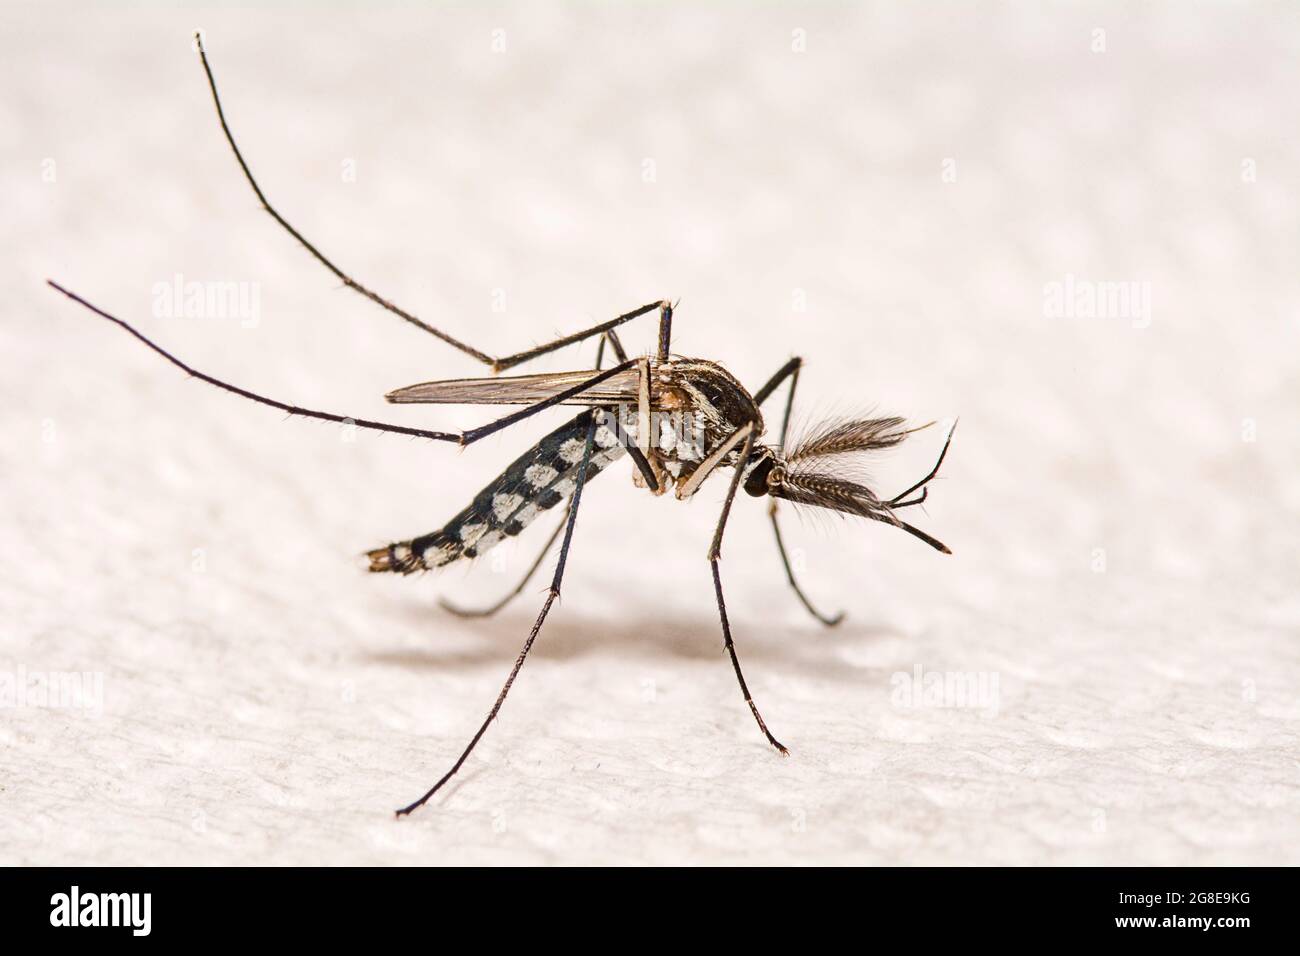 Closeup Aedes aegypti or common house mosquito. Stock Photo